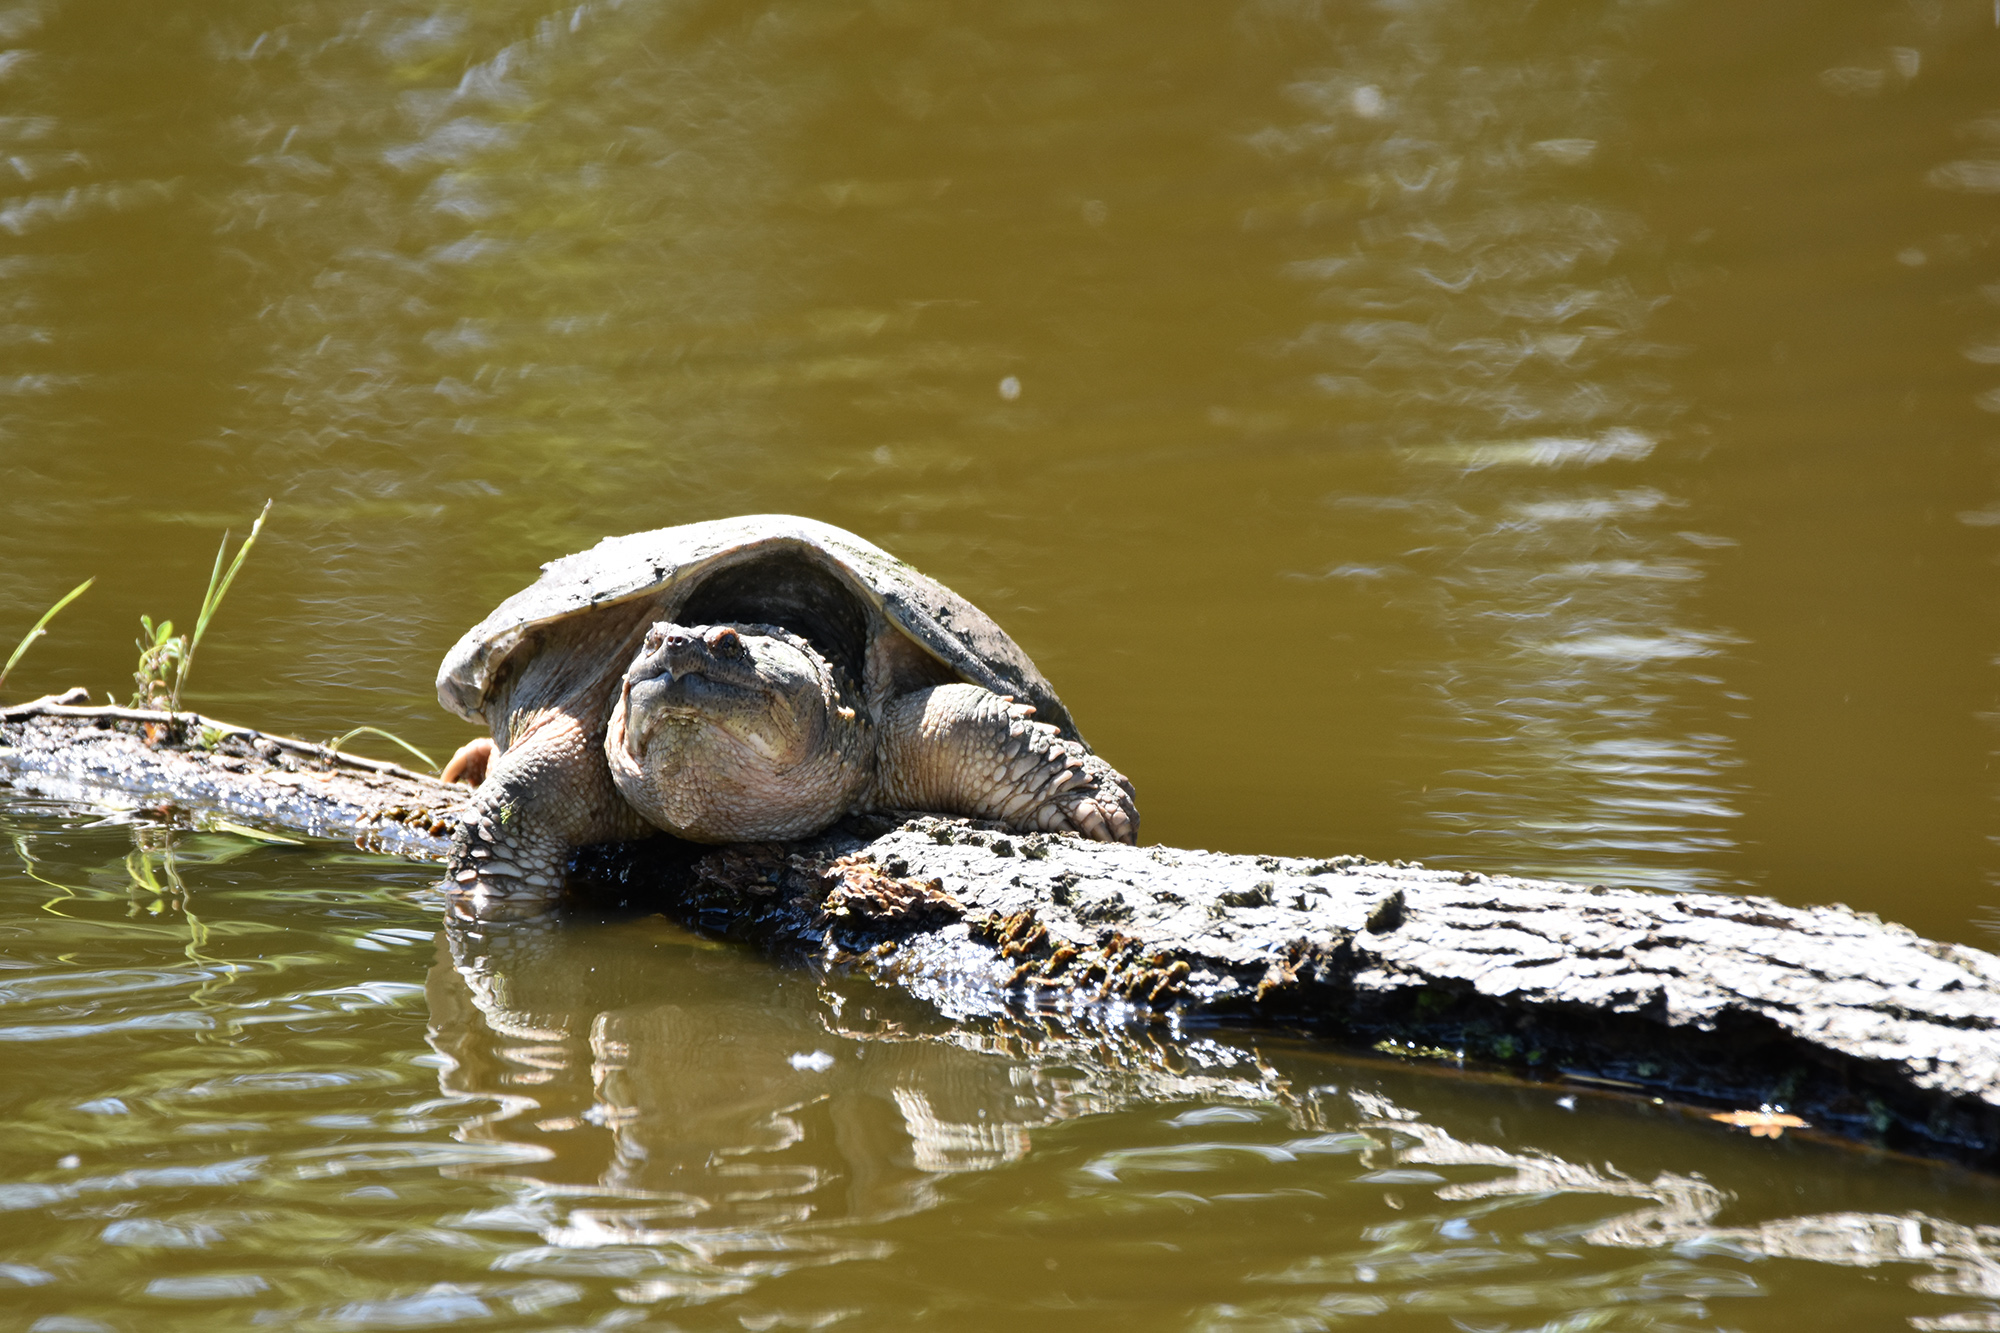 Snapping Turtle Sunbathing